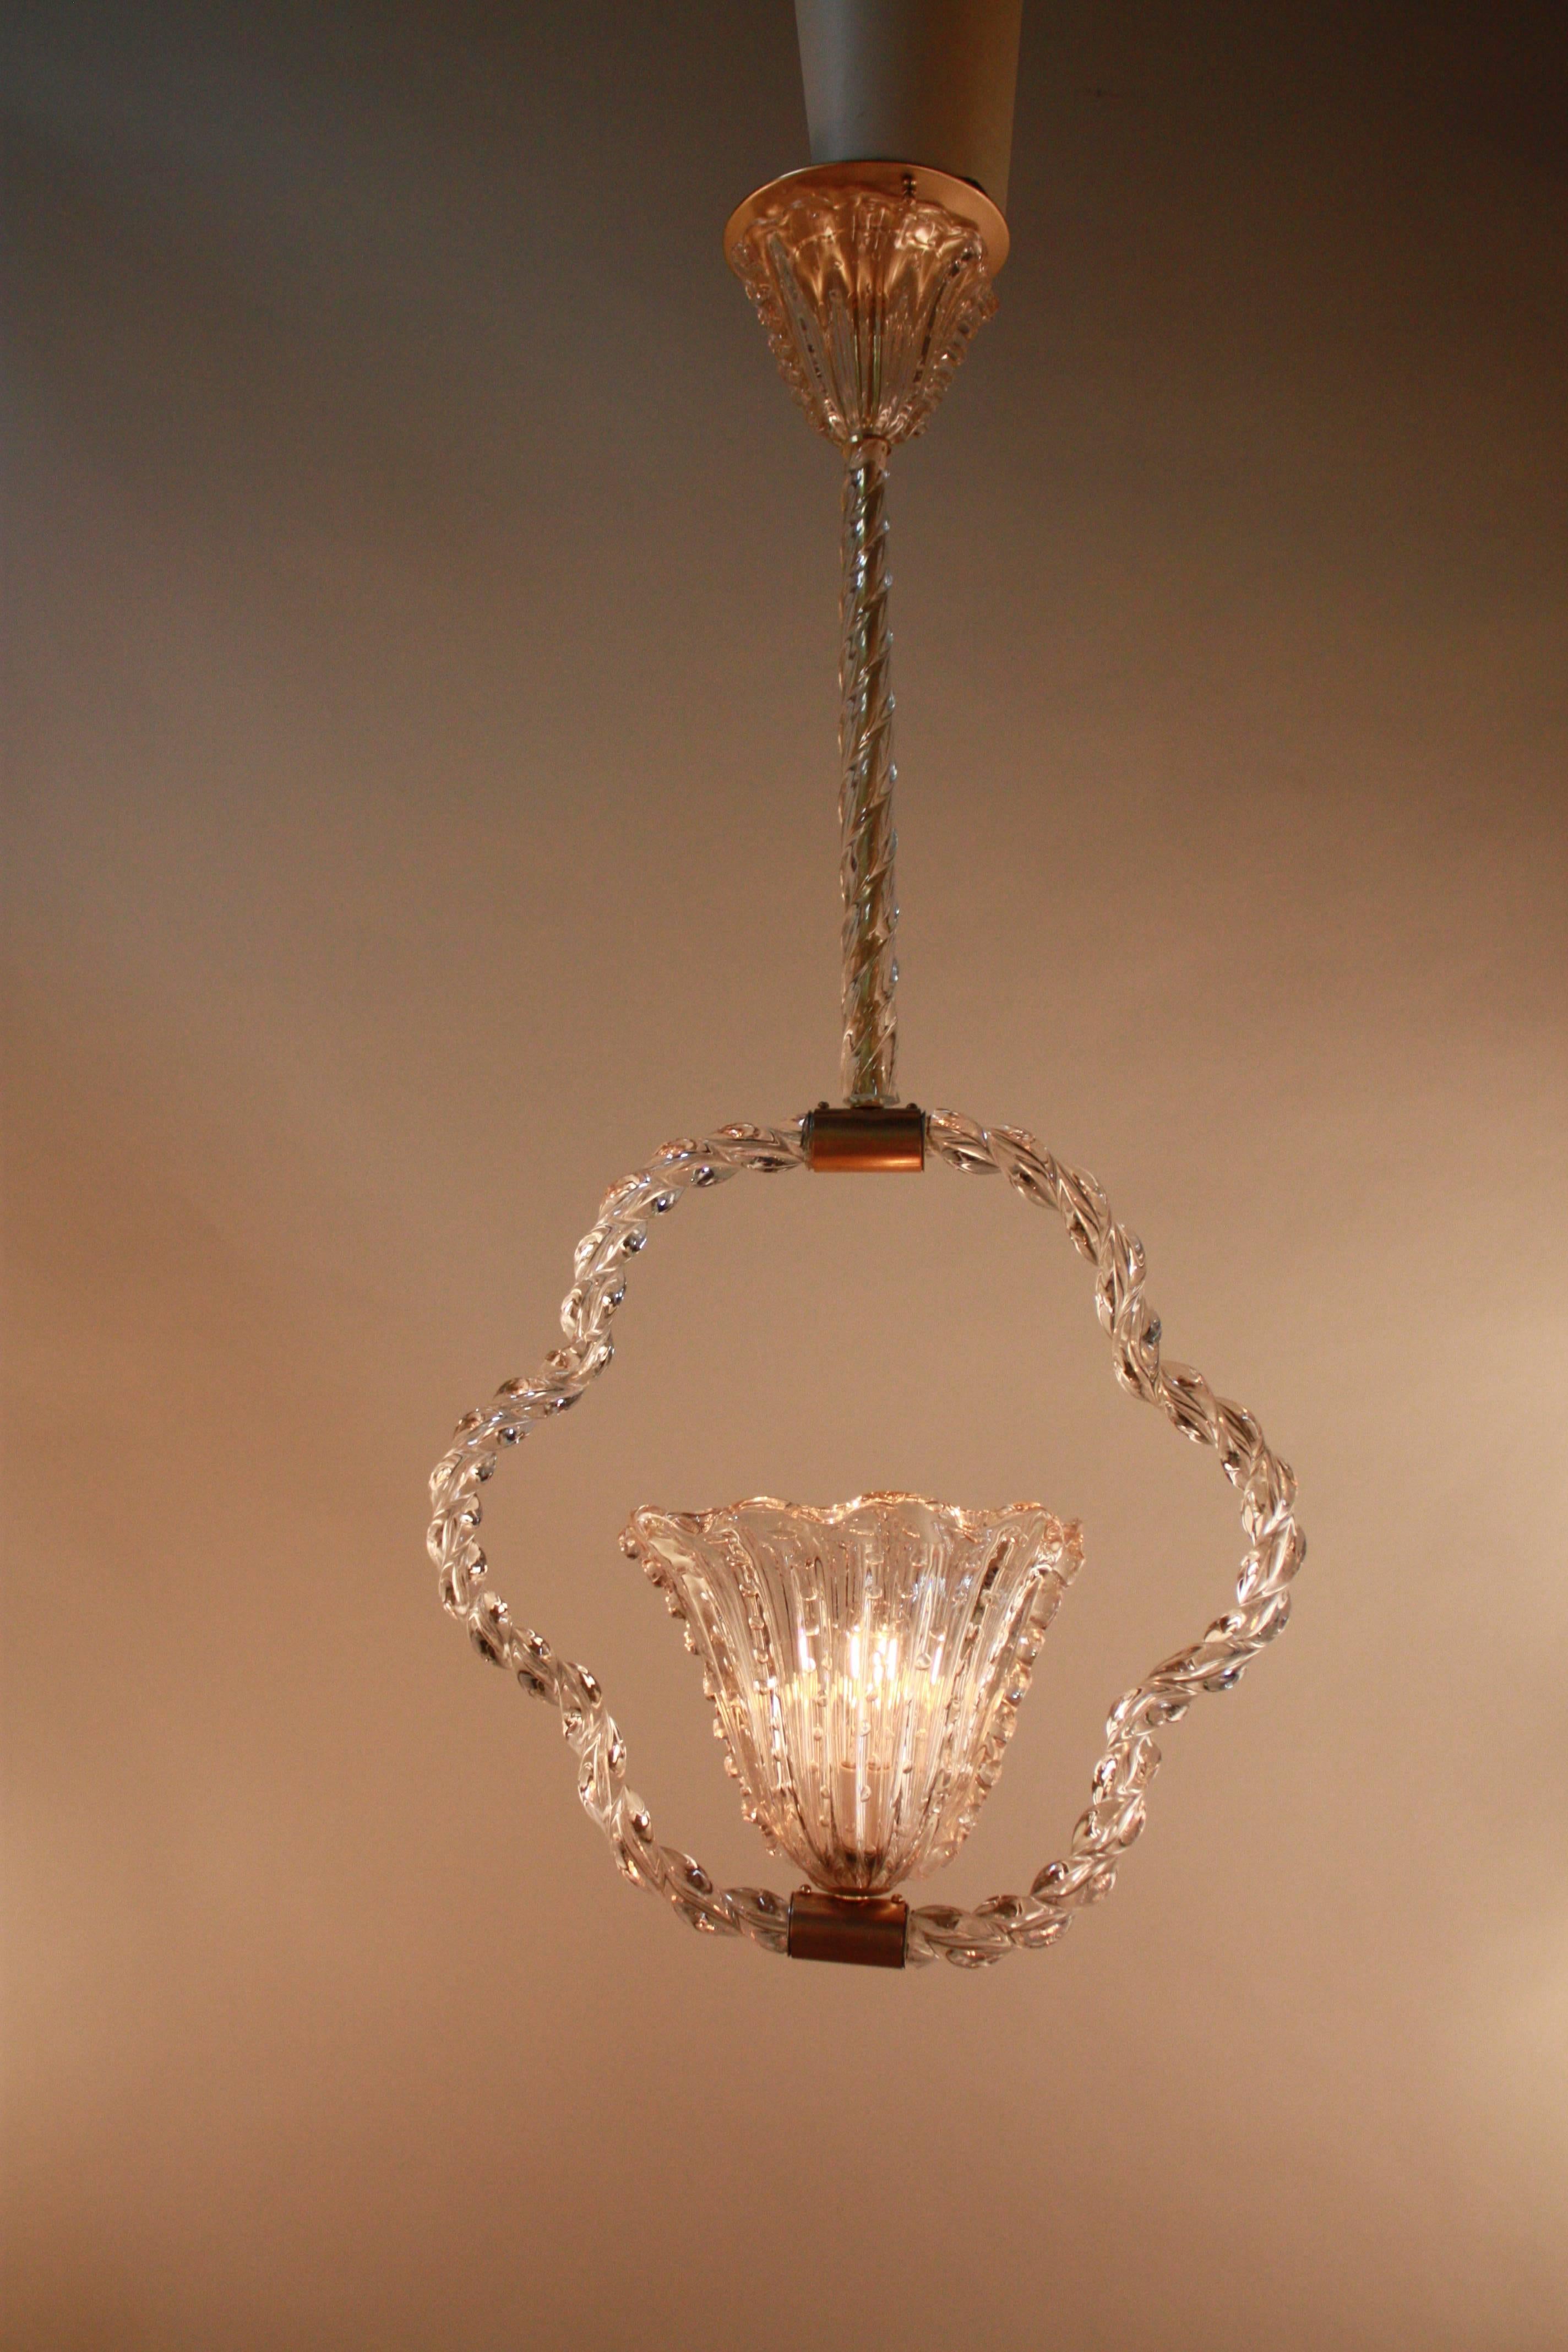 Exquisite one light handblown Murano glass chandelier by Barovier & Toso.